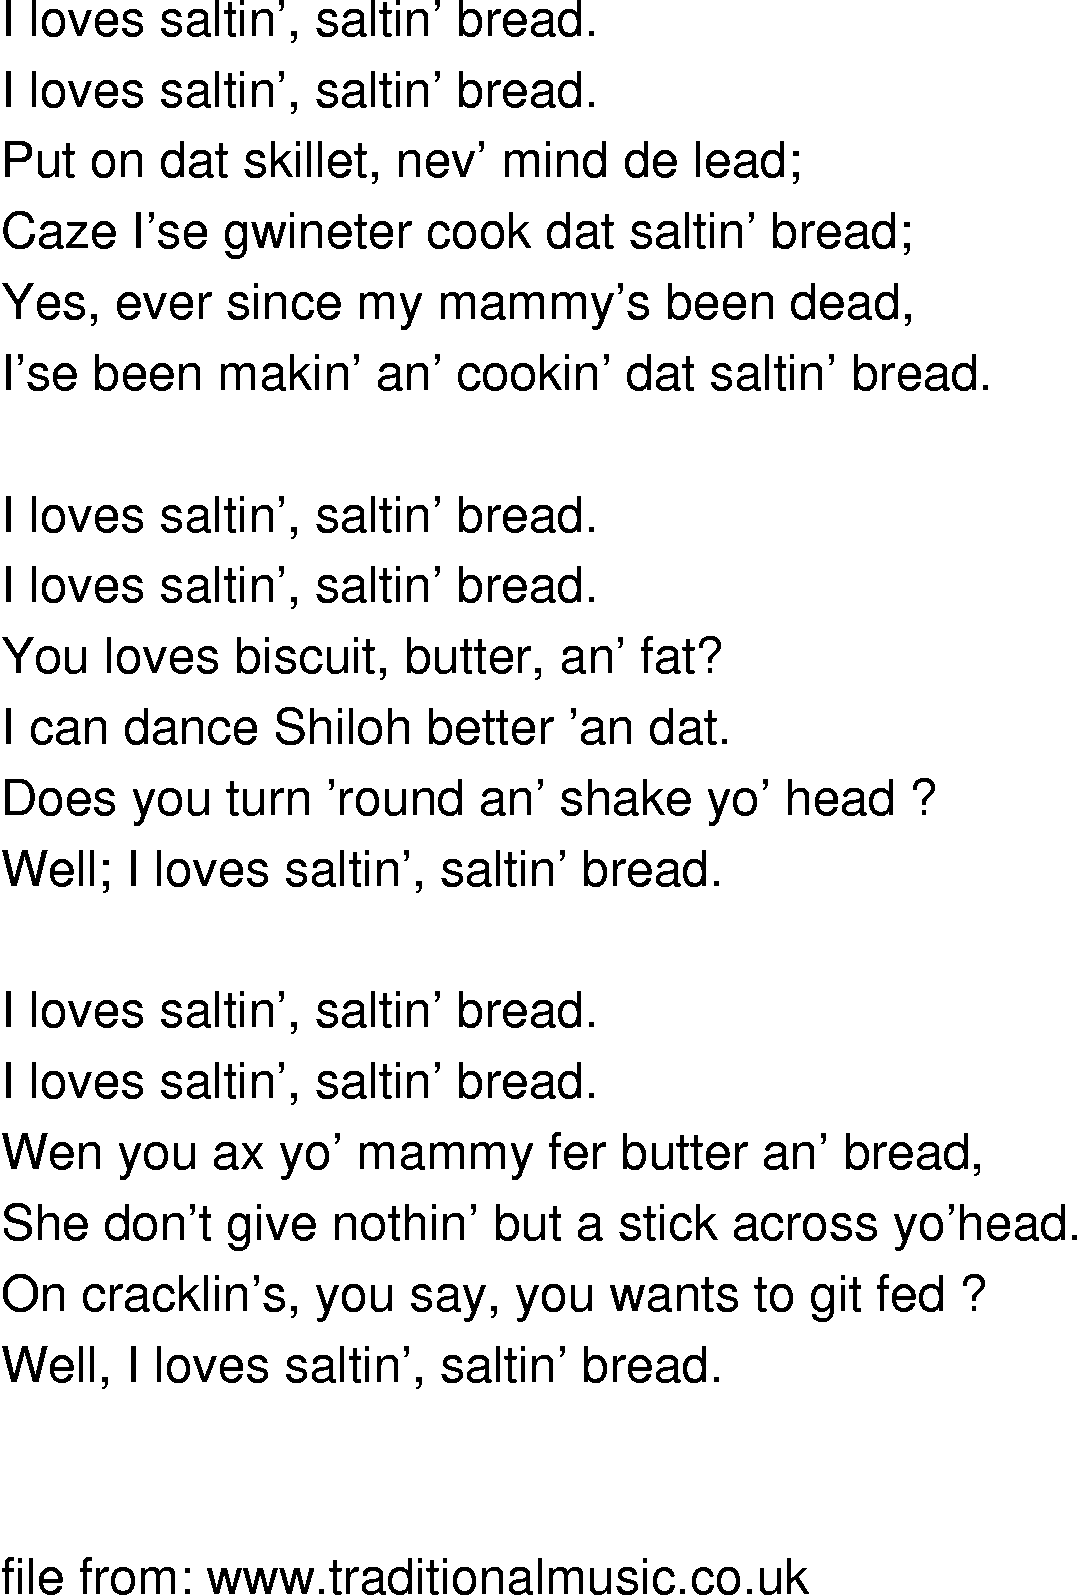 Old-Time (oldtimey) Song Lyrics - shortenin bread